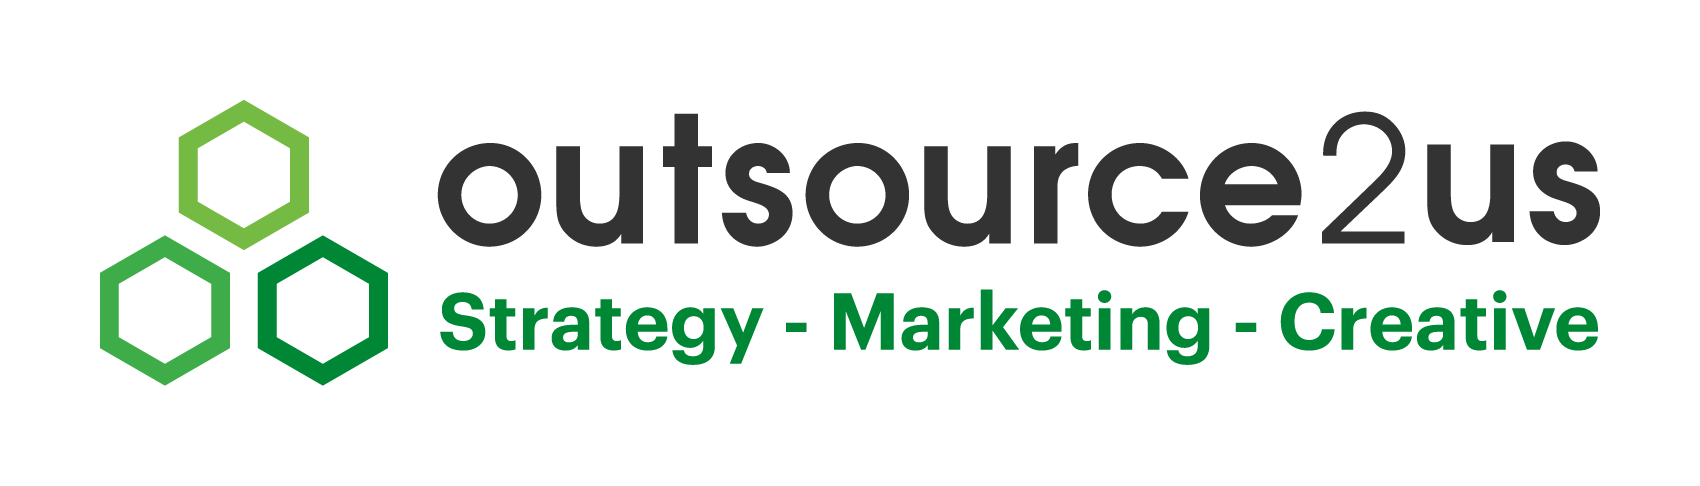 outsource2us logo